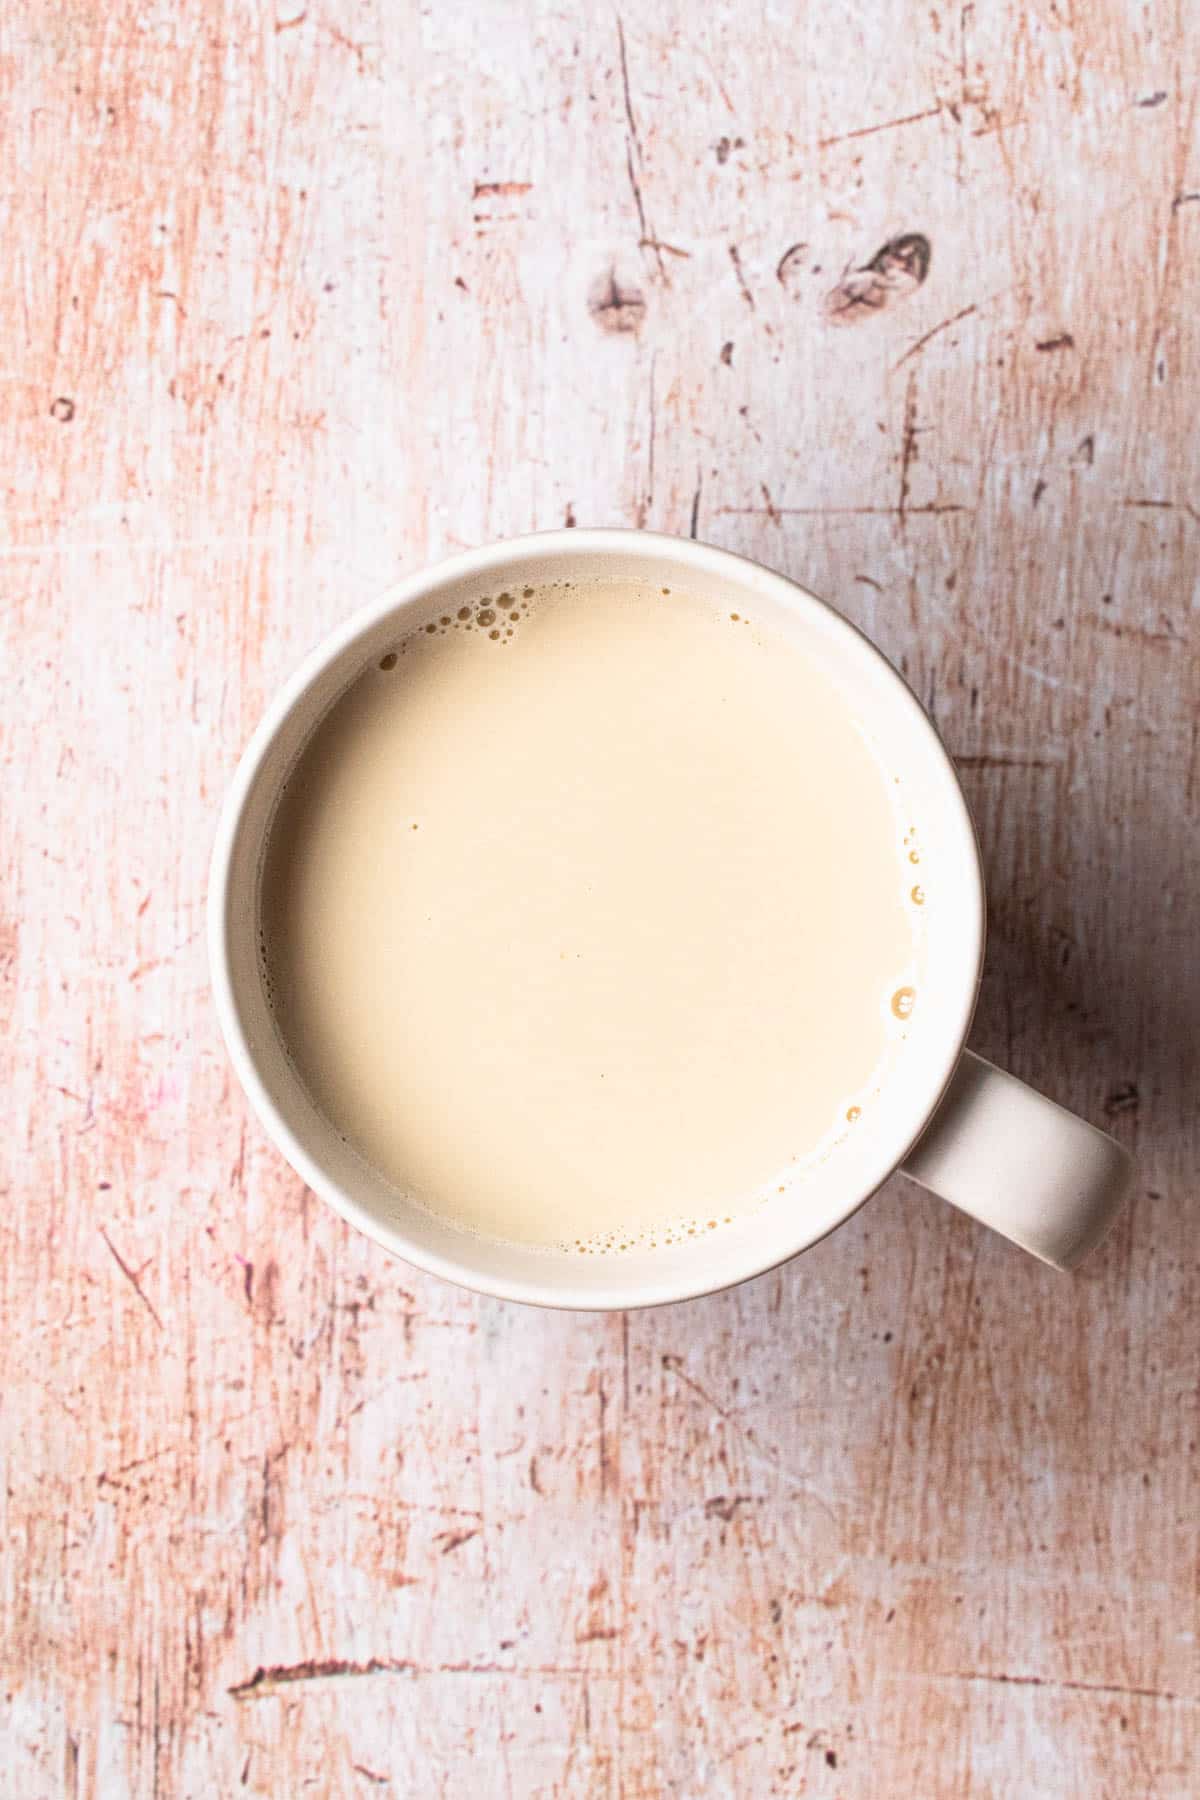 Strained chamomile milk tea in a mug.